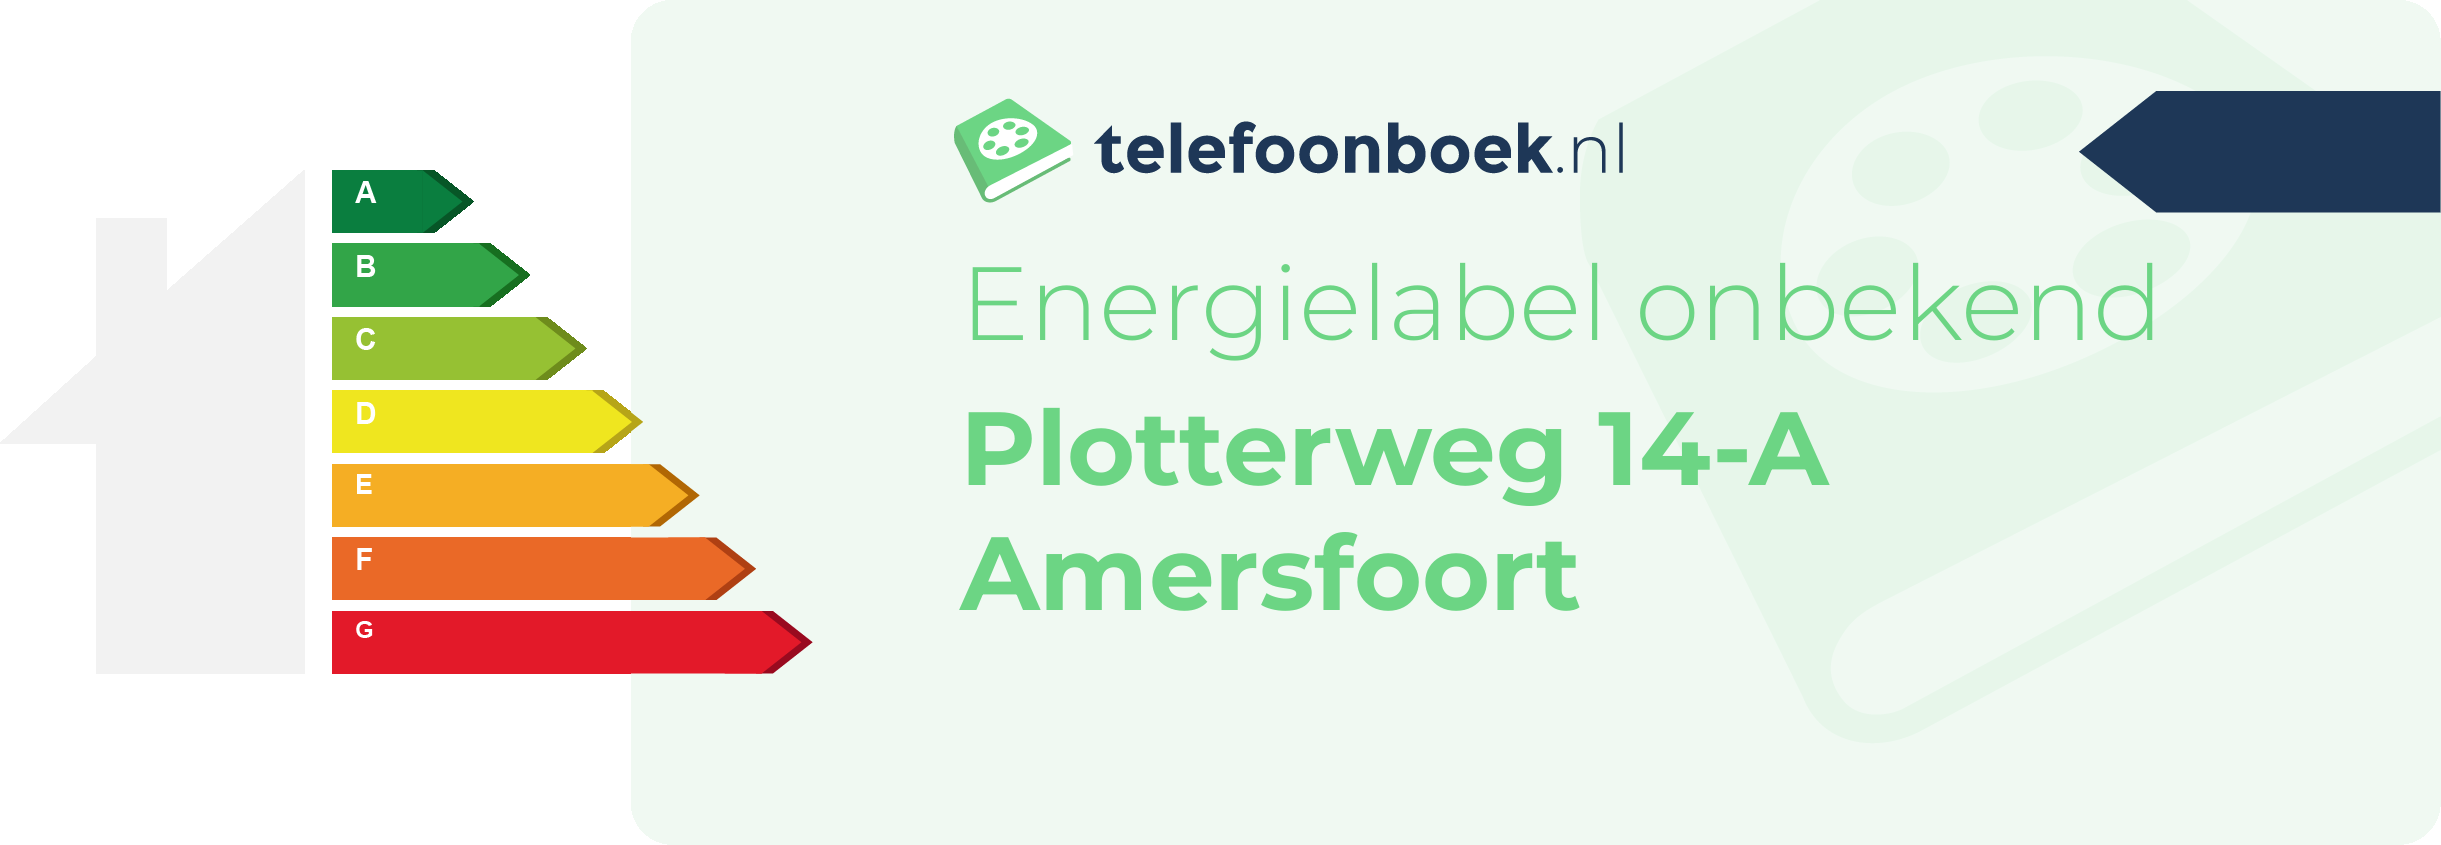 Energielabel Plotterweg 14-A Amersfoort